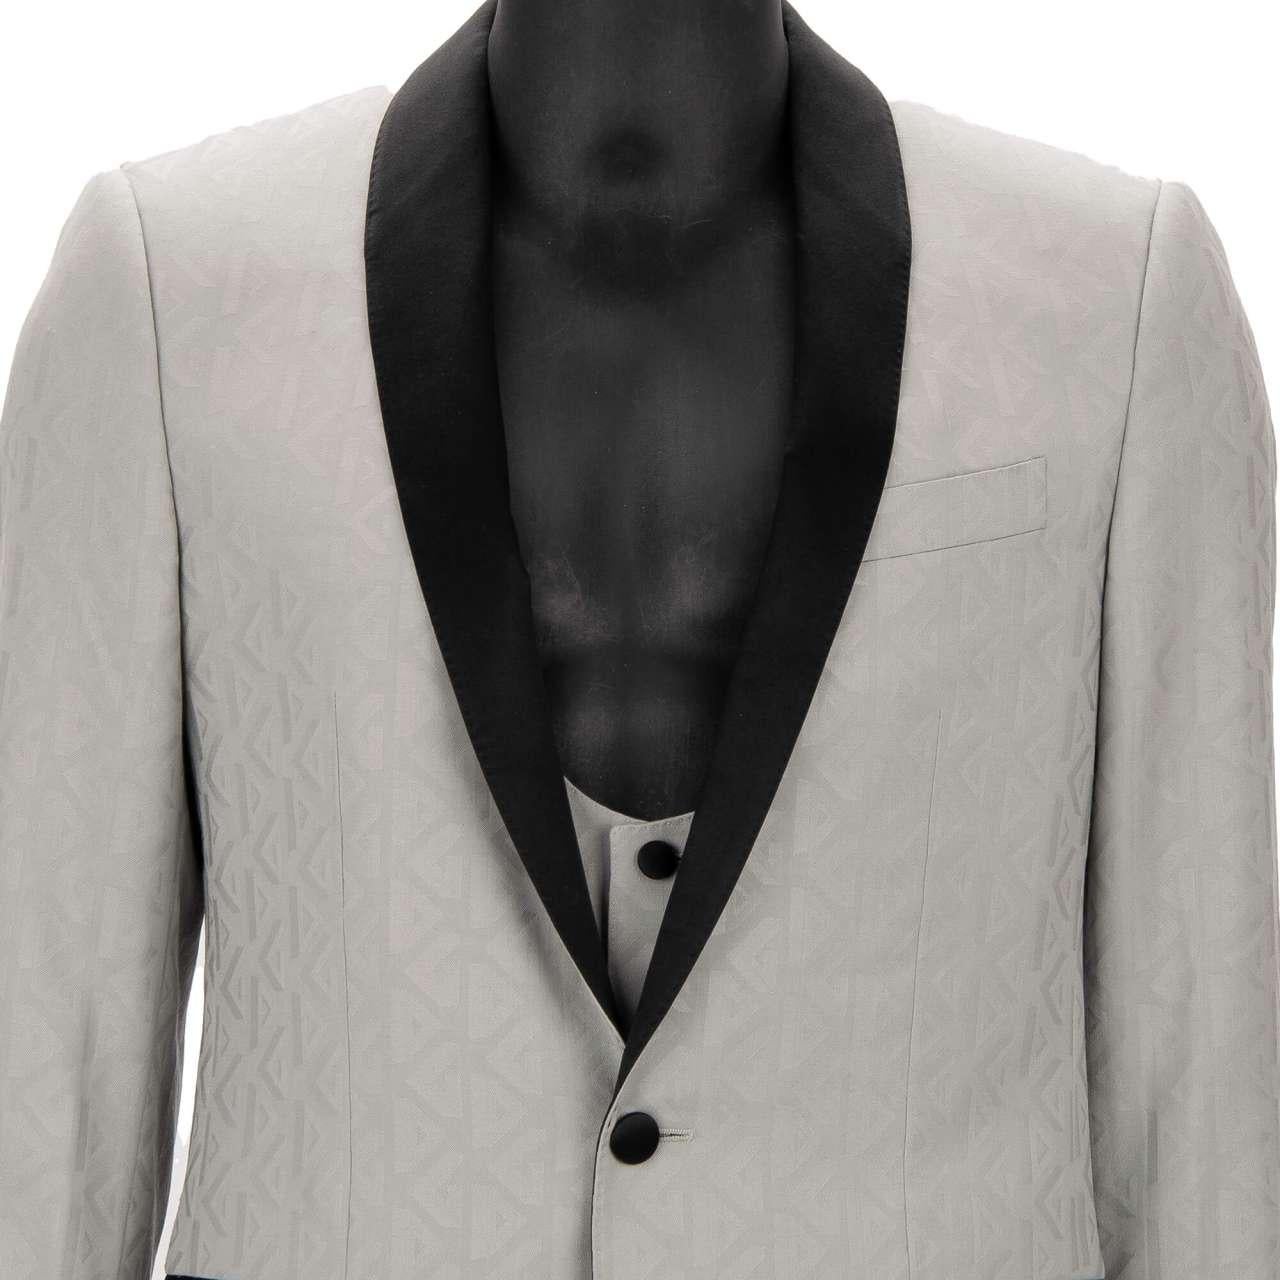 Dolce & Gabbana 3 Piece Silk Wool Suit Jacket Waistcoat MARTINI Gray 48 38 M For Sale 5